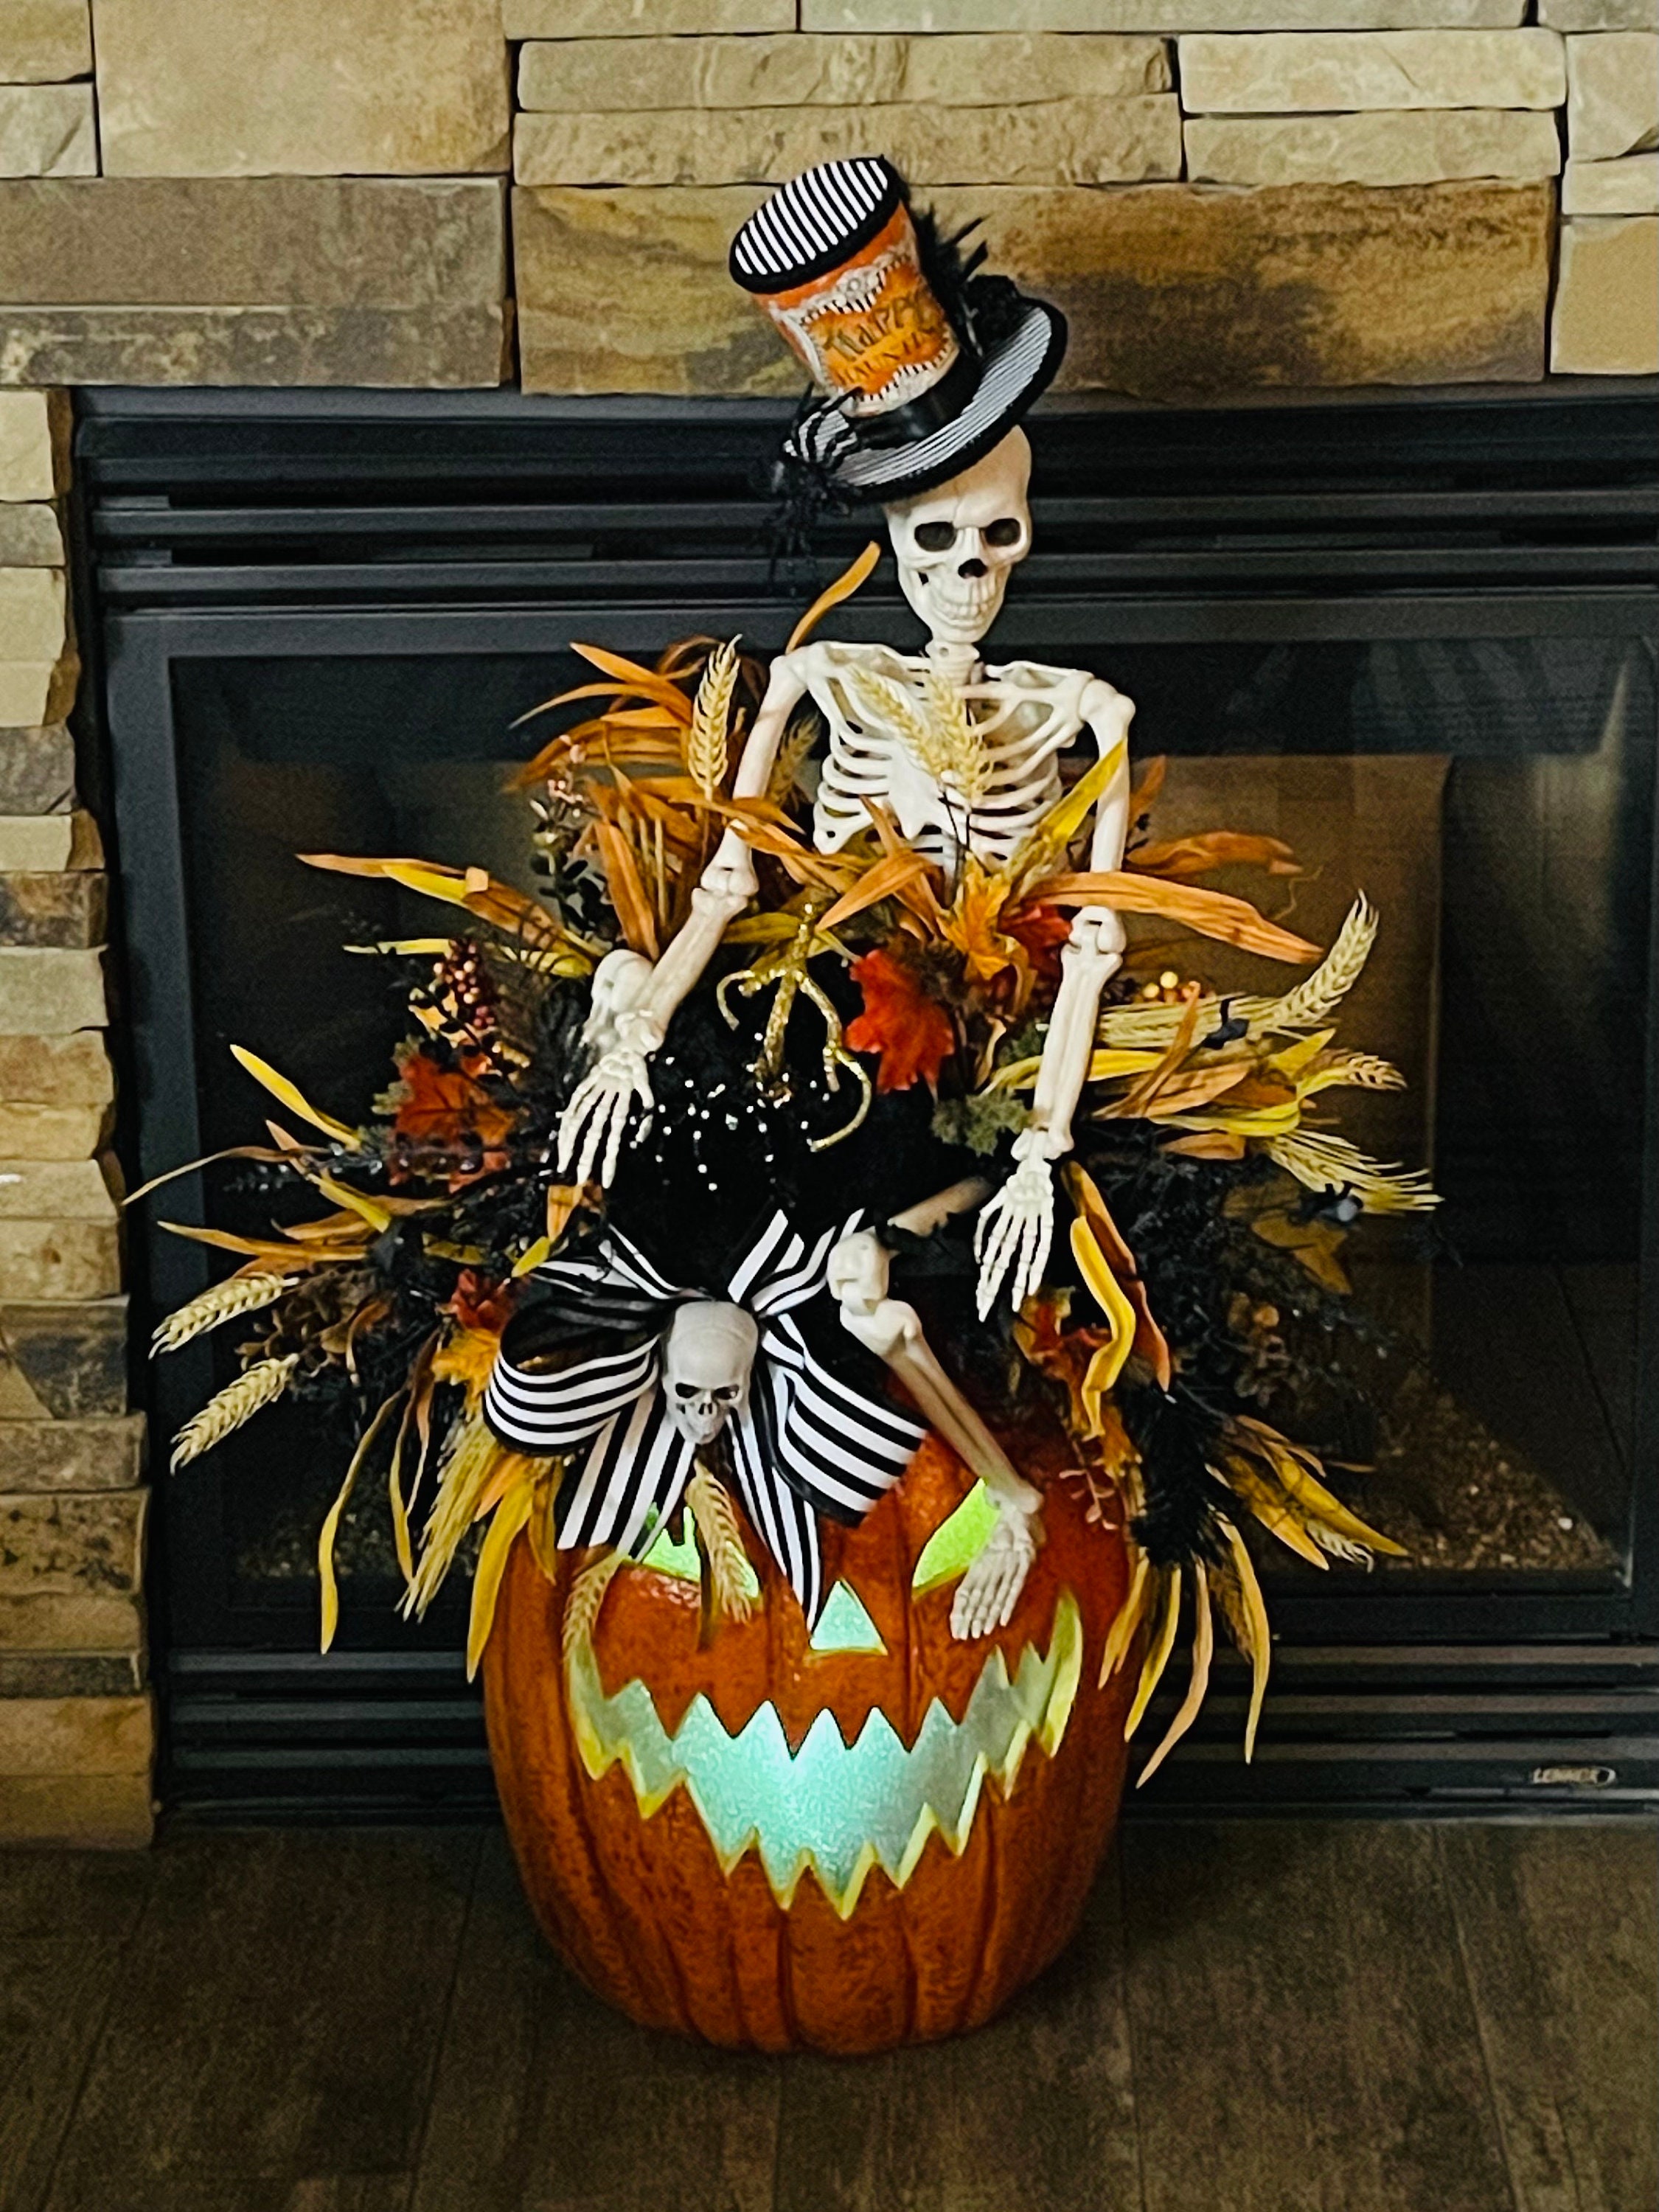 30 Halloween Centerpieces & Table Decorations - DIY Ideas for Halloween  Themed Tables